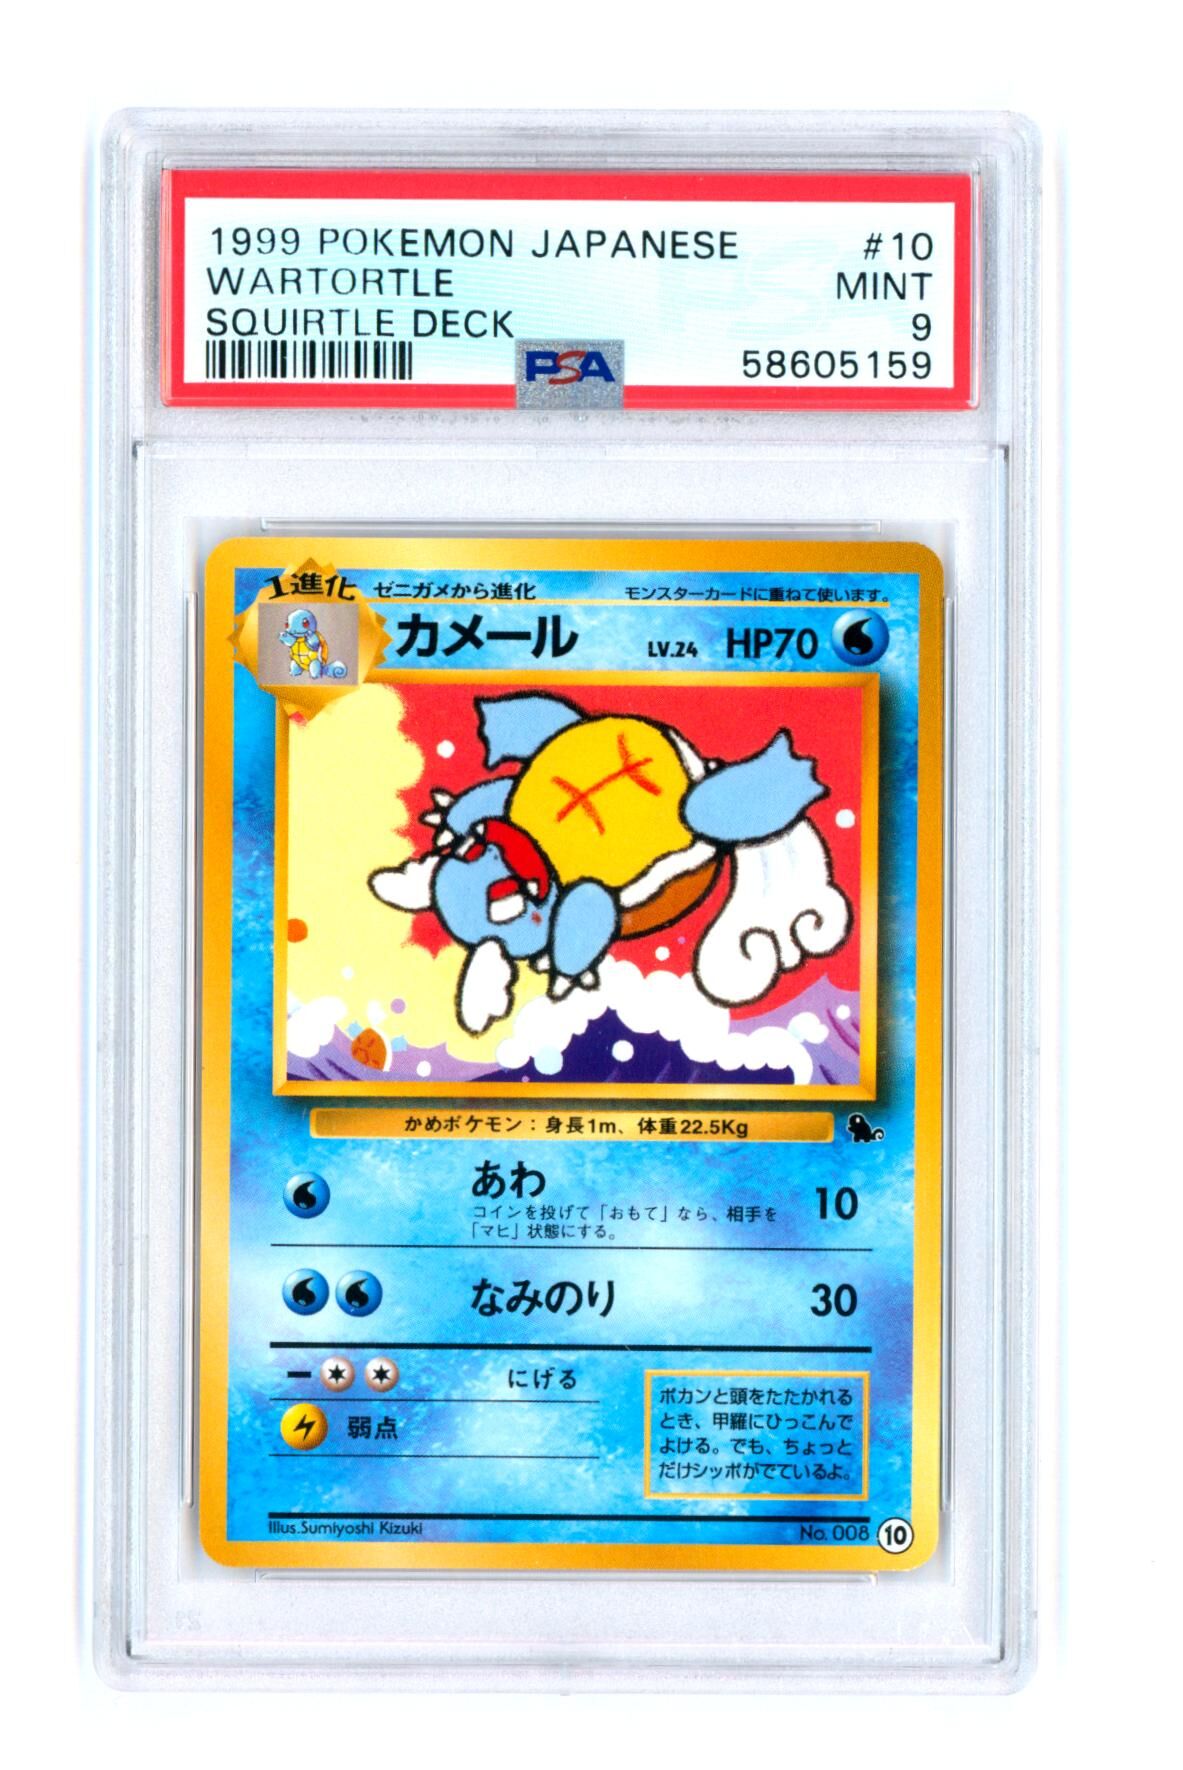 Wartortle #10 - Squirtle Deck - Japanese - PSA 9 MINT - Pokémon